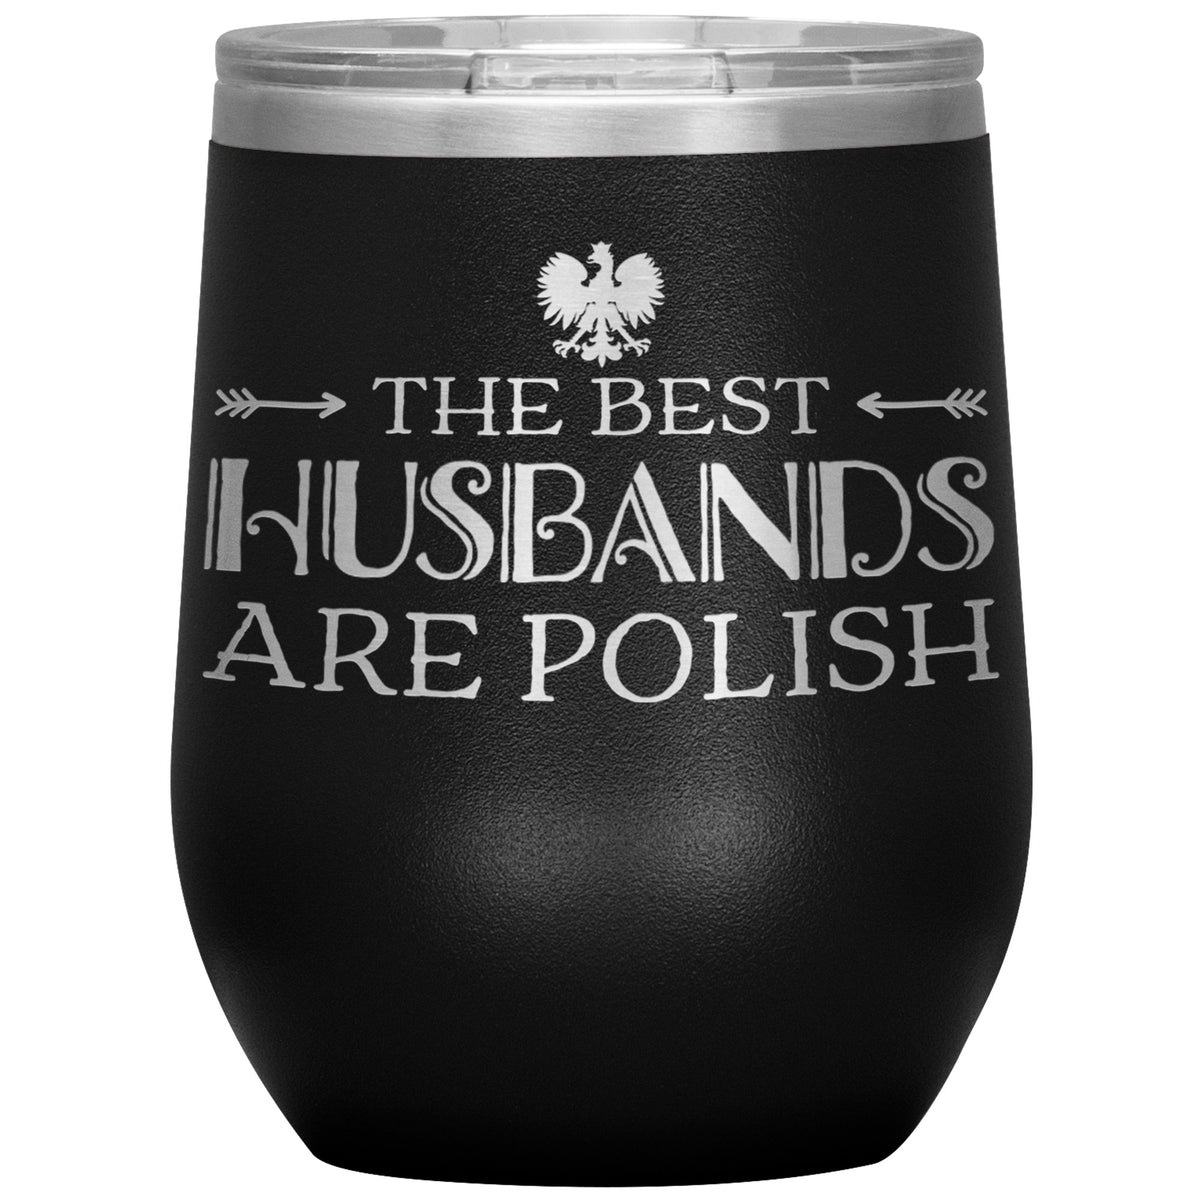 The Best Husbands Are Polish Insulated Wine Tumbler Tumblers teelaunch Black  